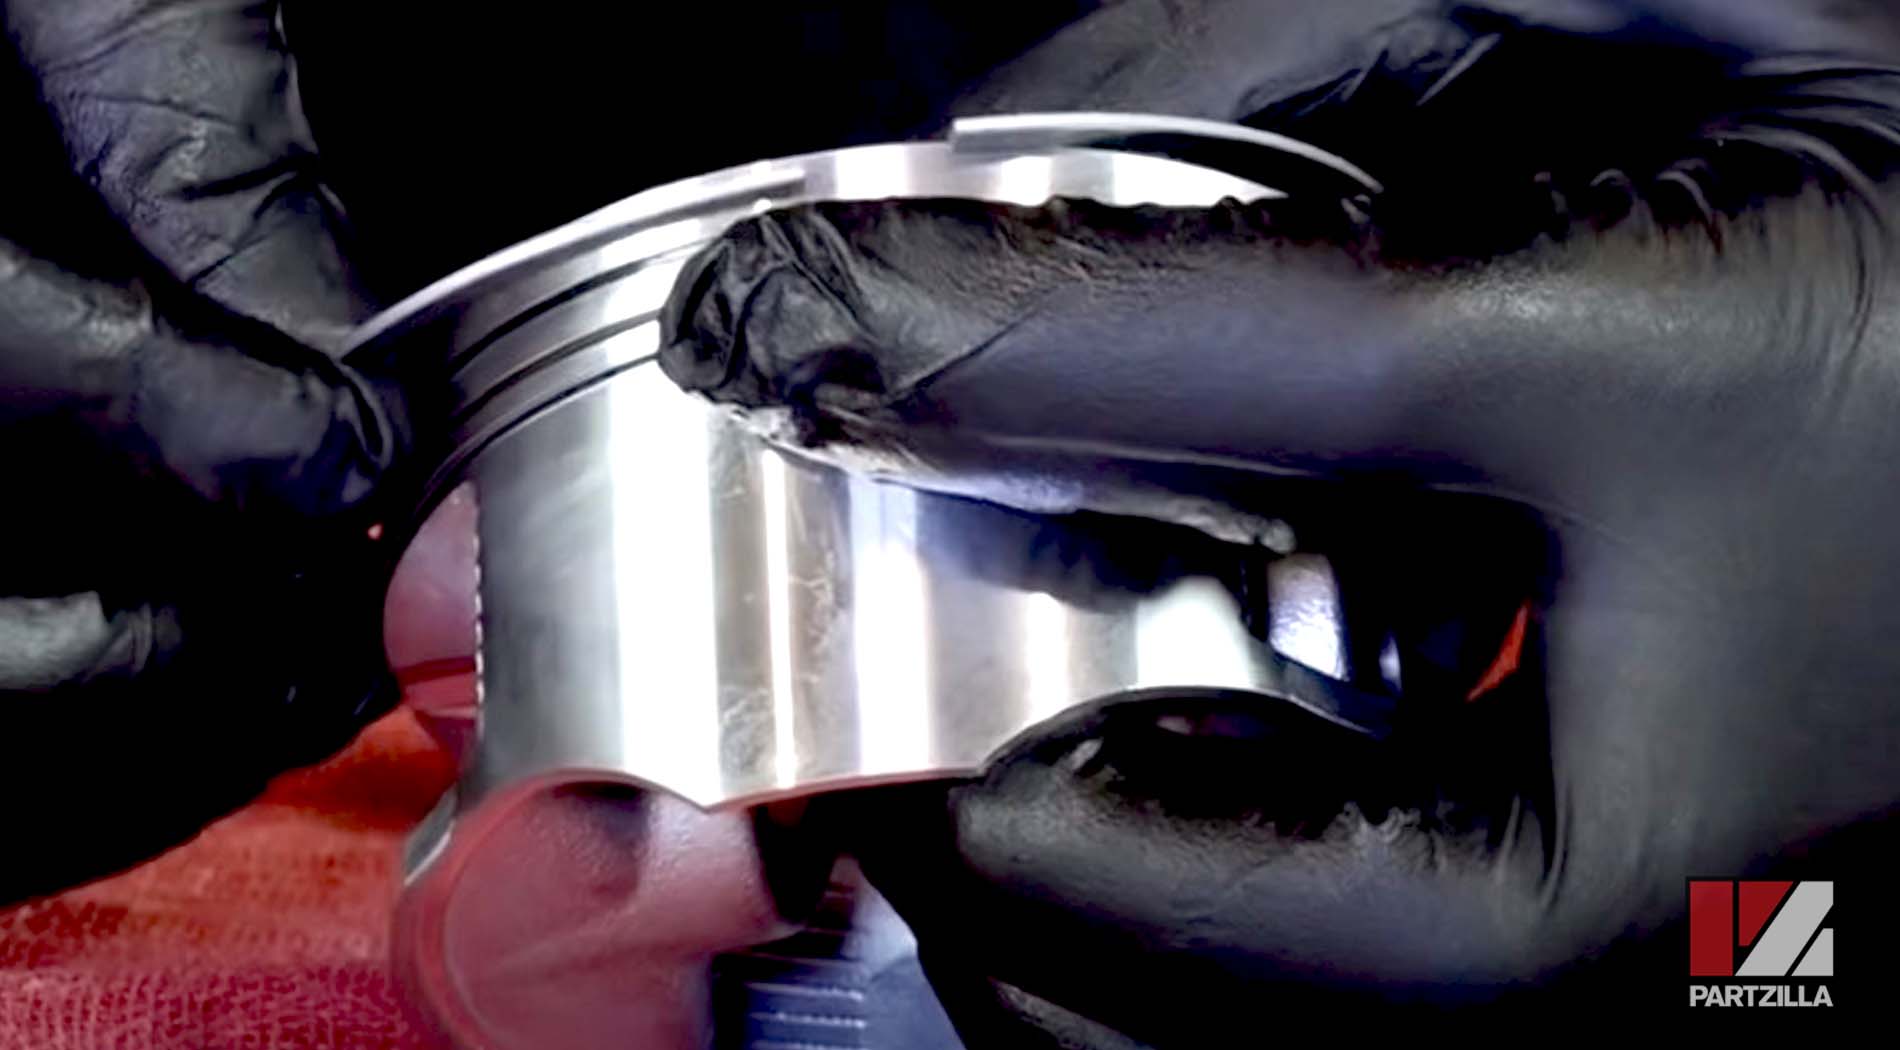 Honda TRX400 engine rebuild piston rings